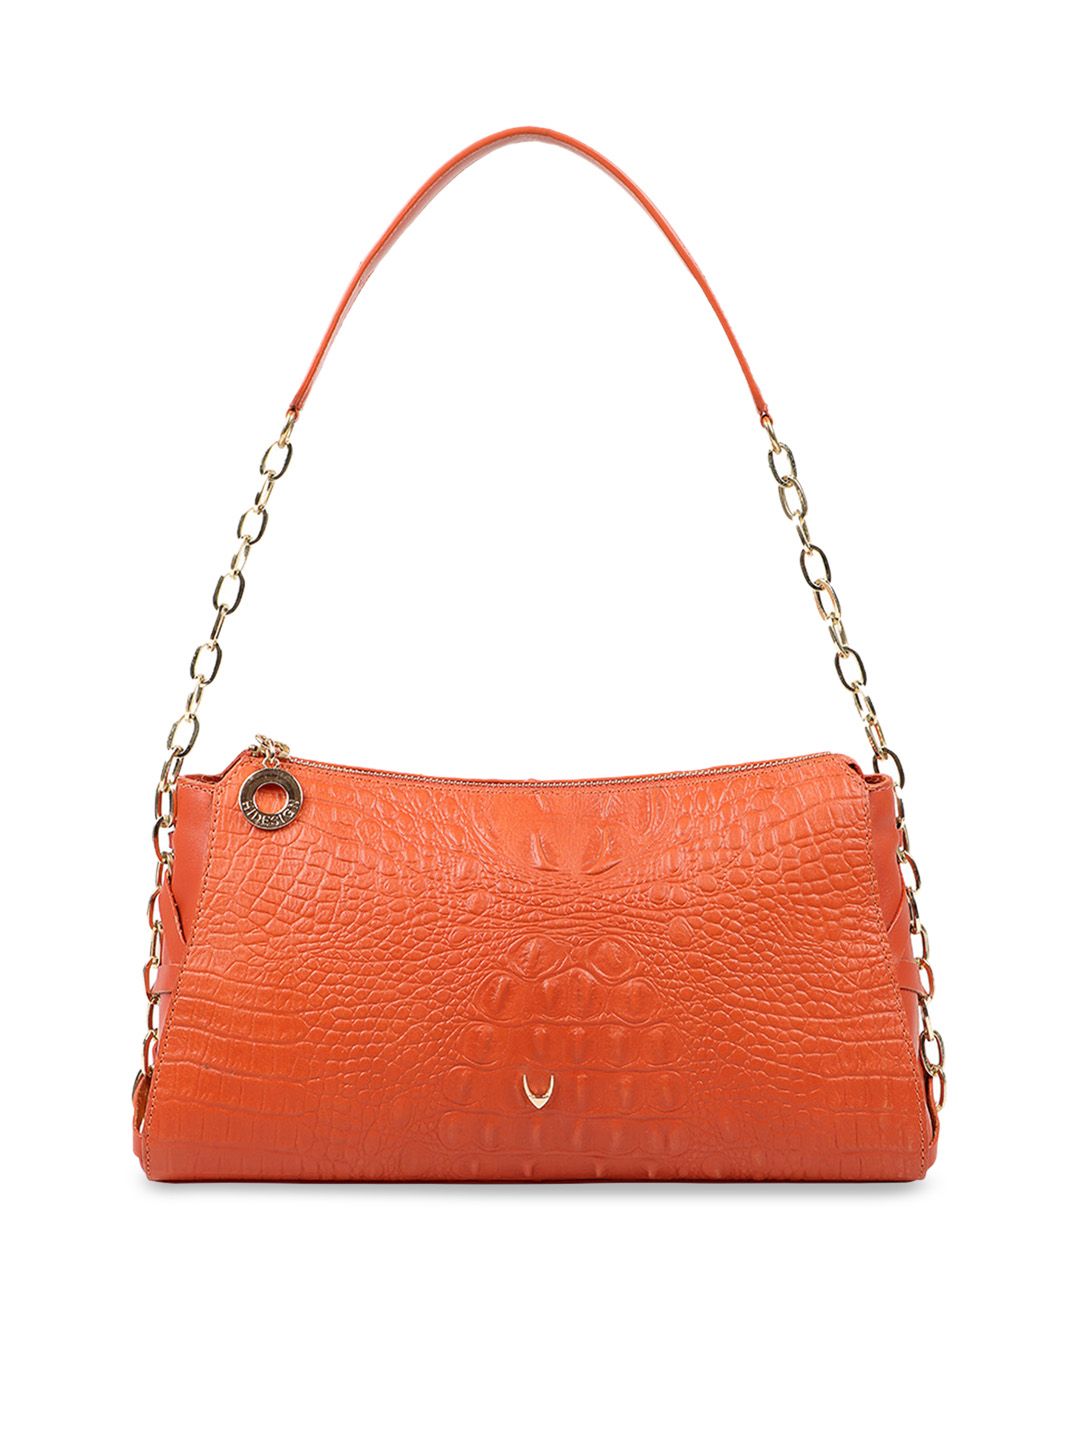 Hidesign Orange Crocodile Skin Textured Leather Shoulder Bag Price in India